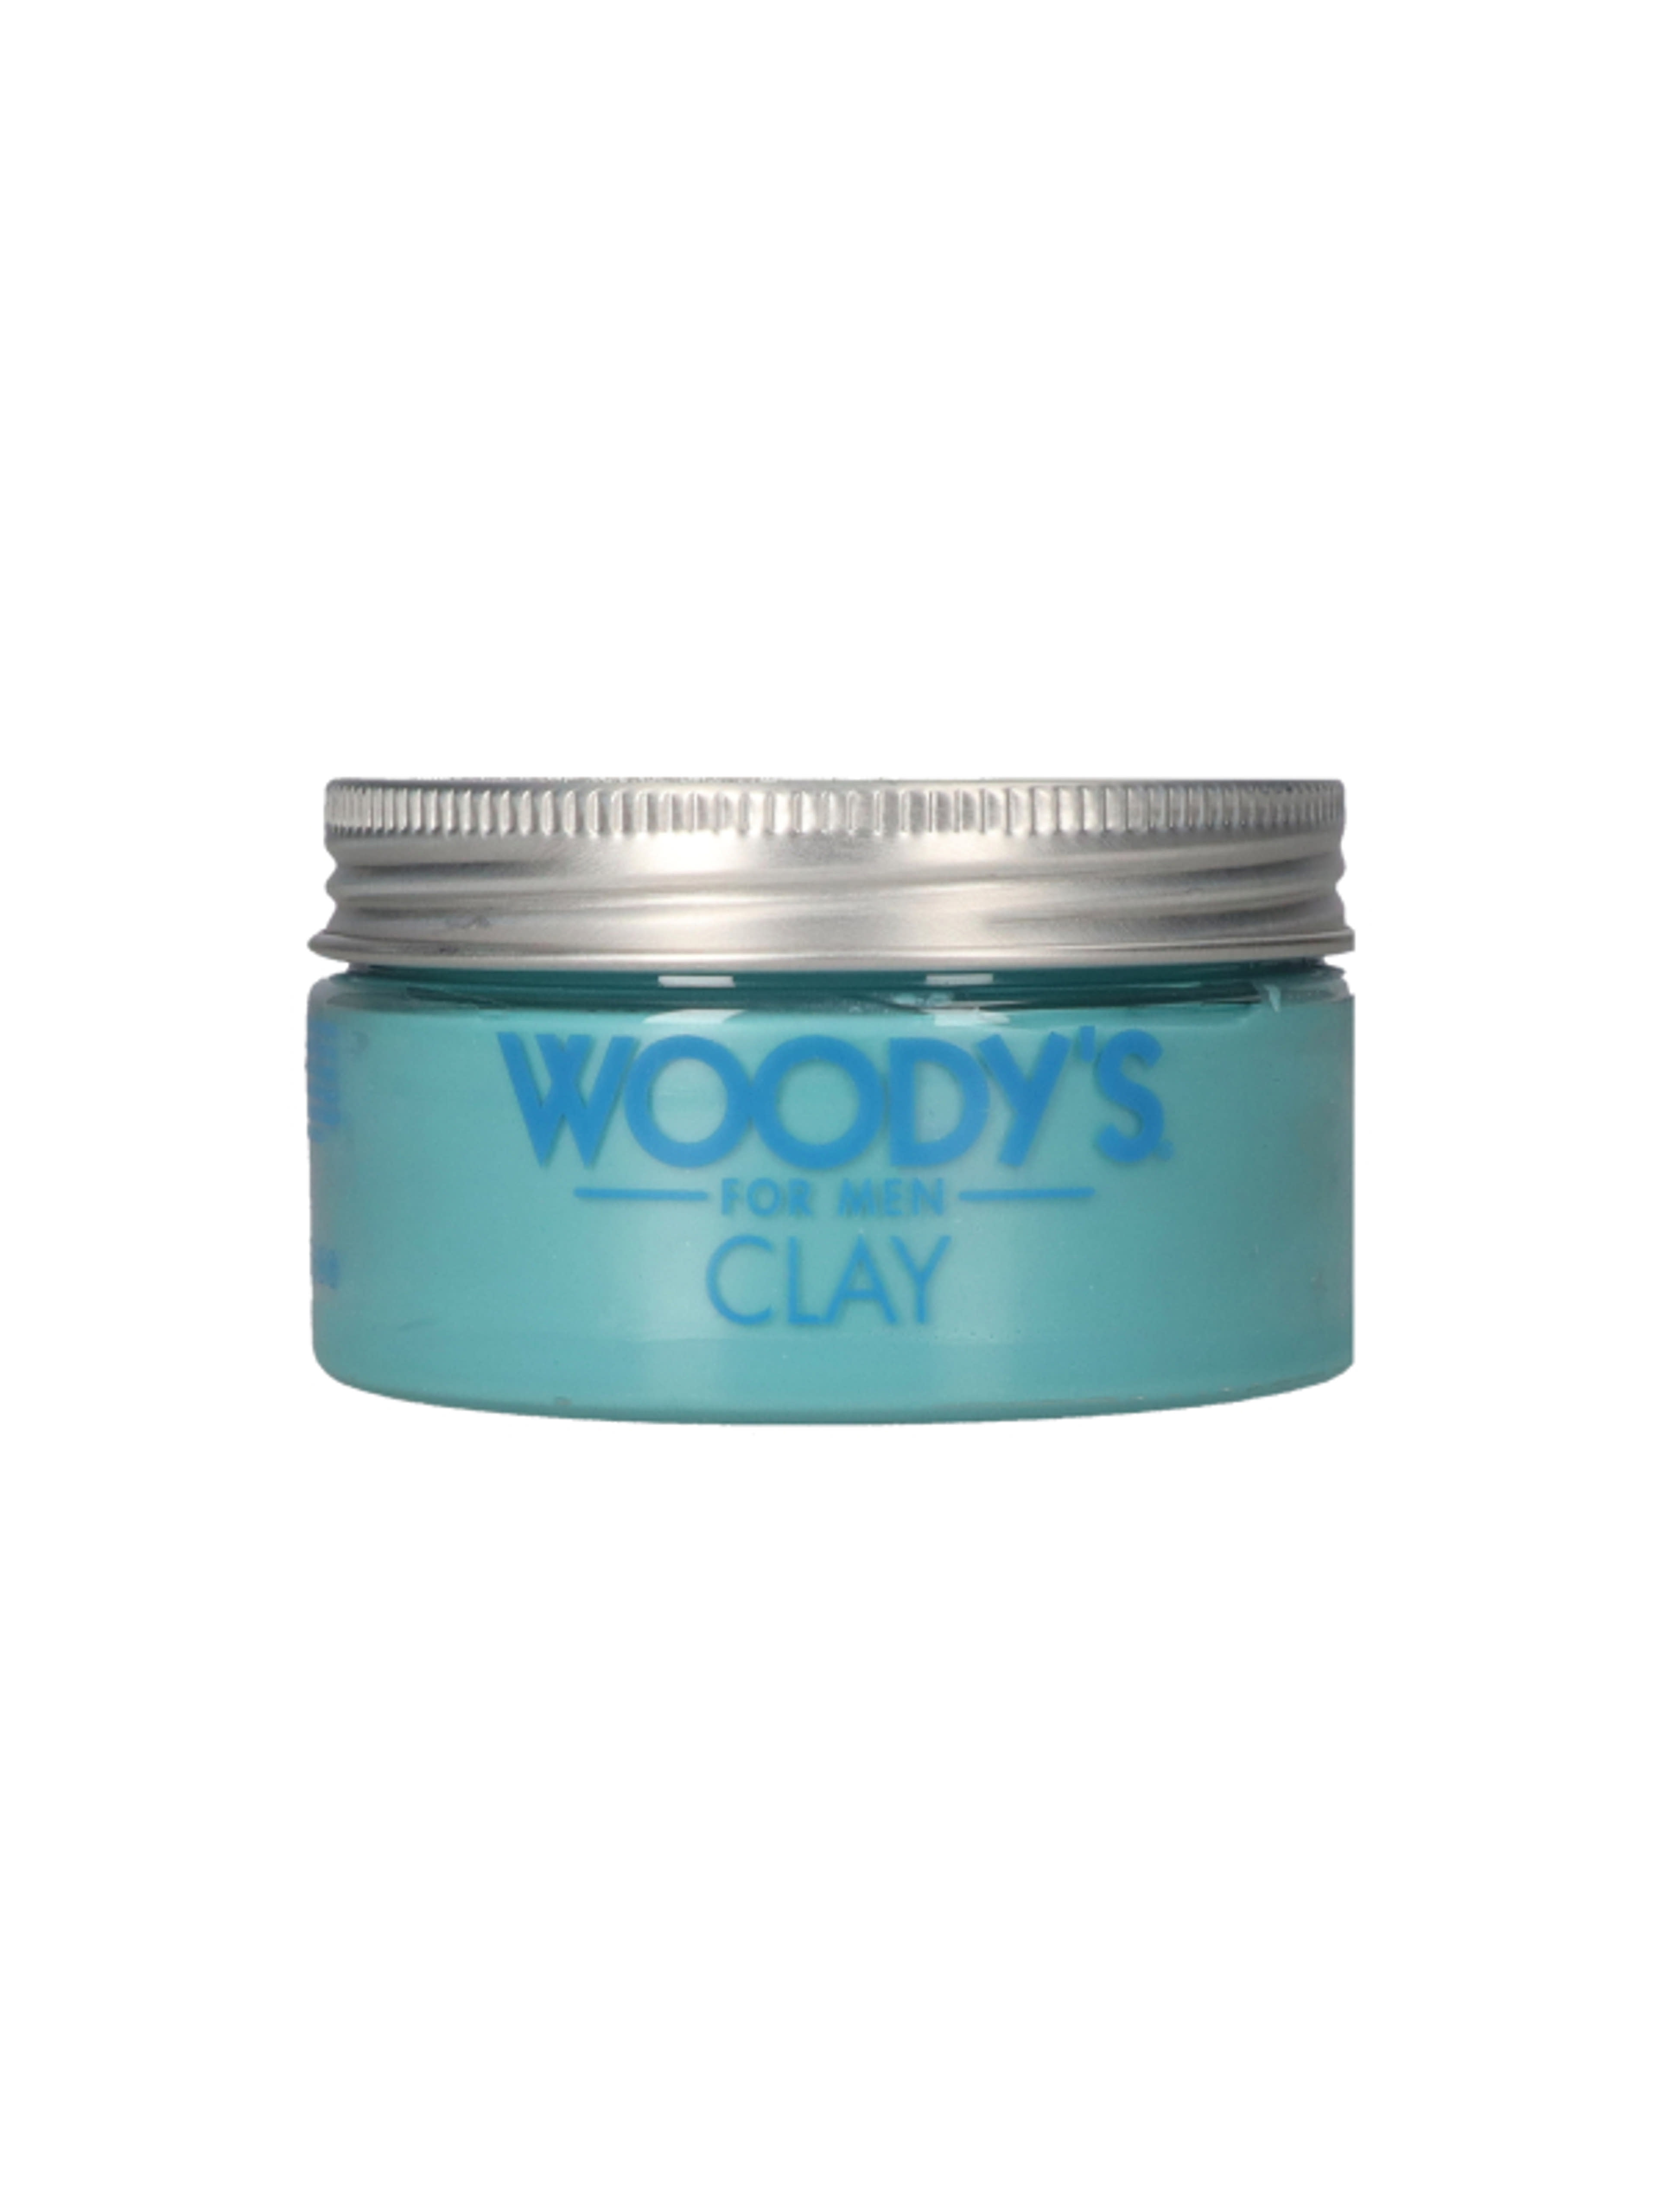 Woody's hajformázó clay - 96 g-2